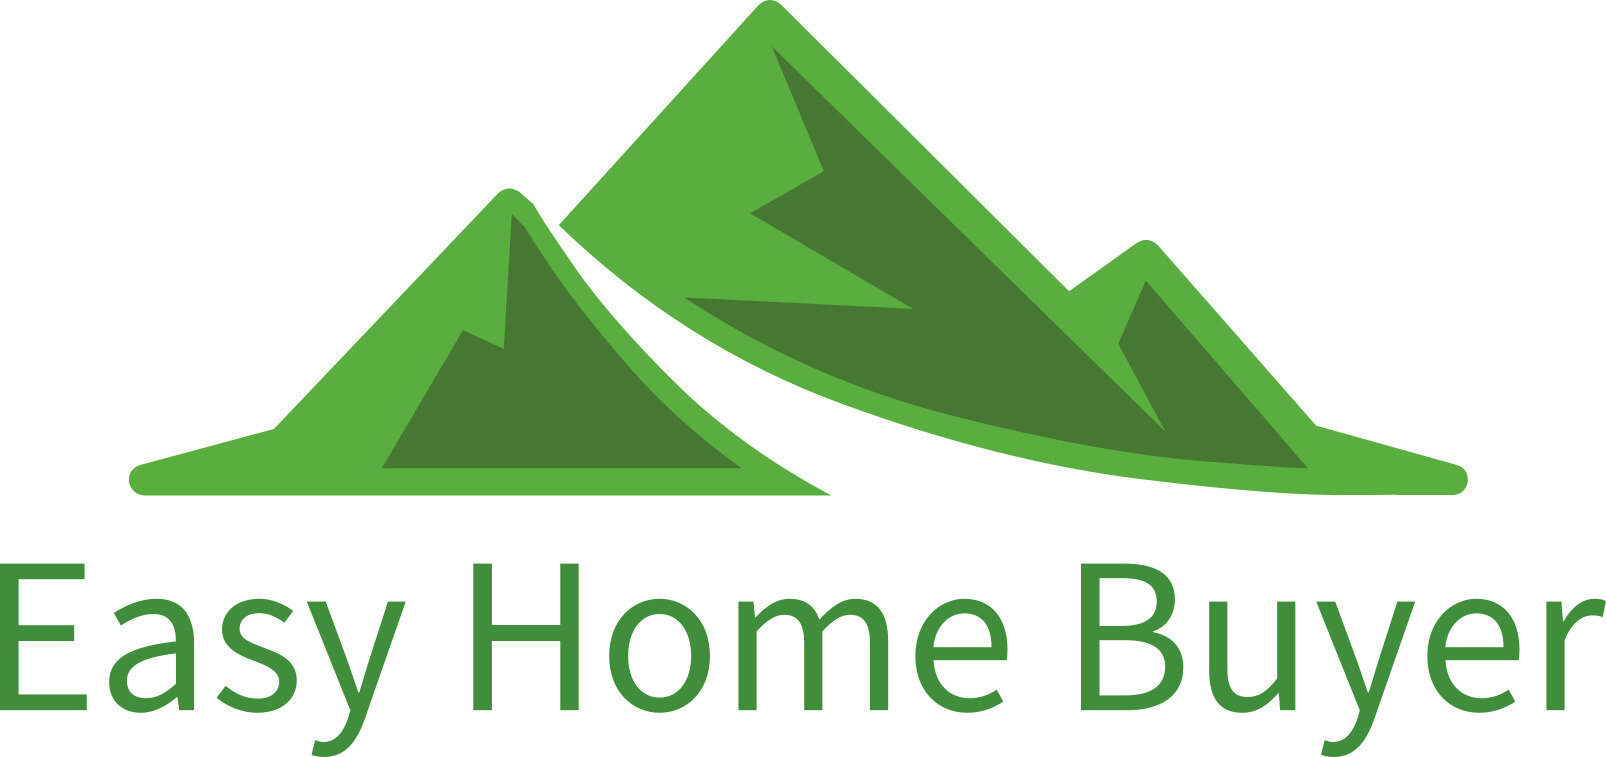 Easy Home Buyer logo